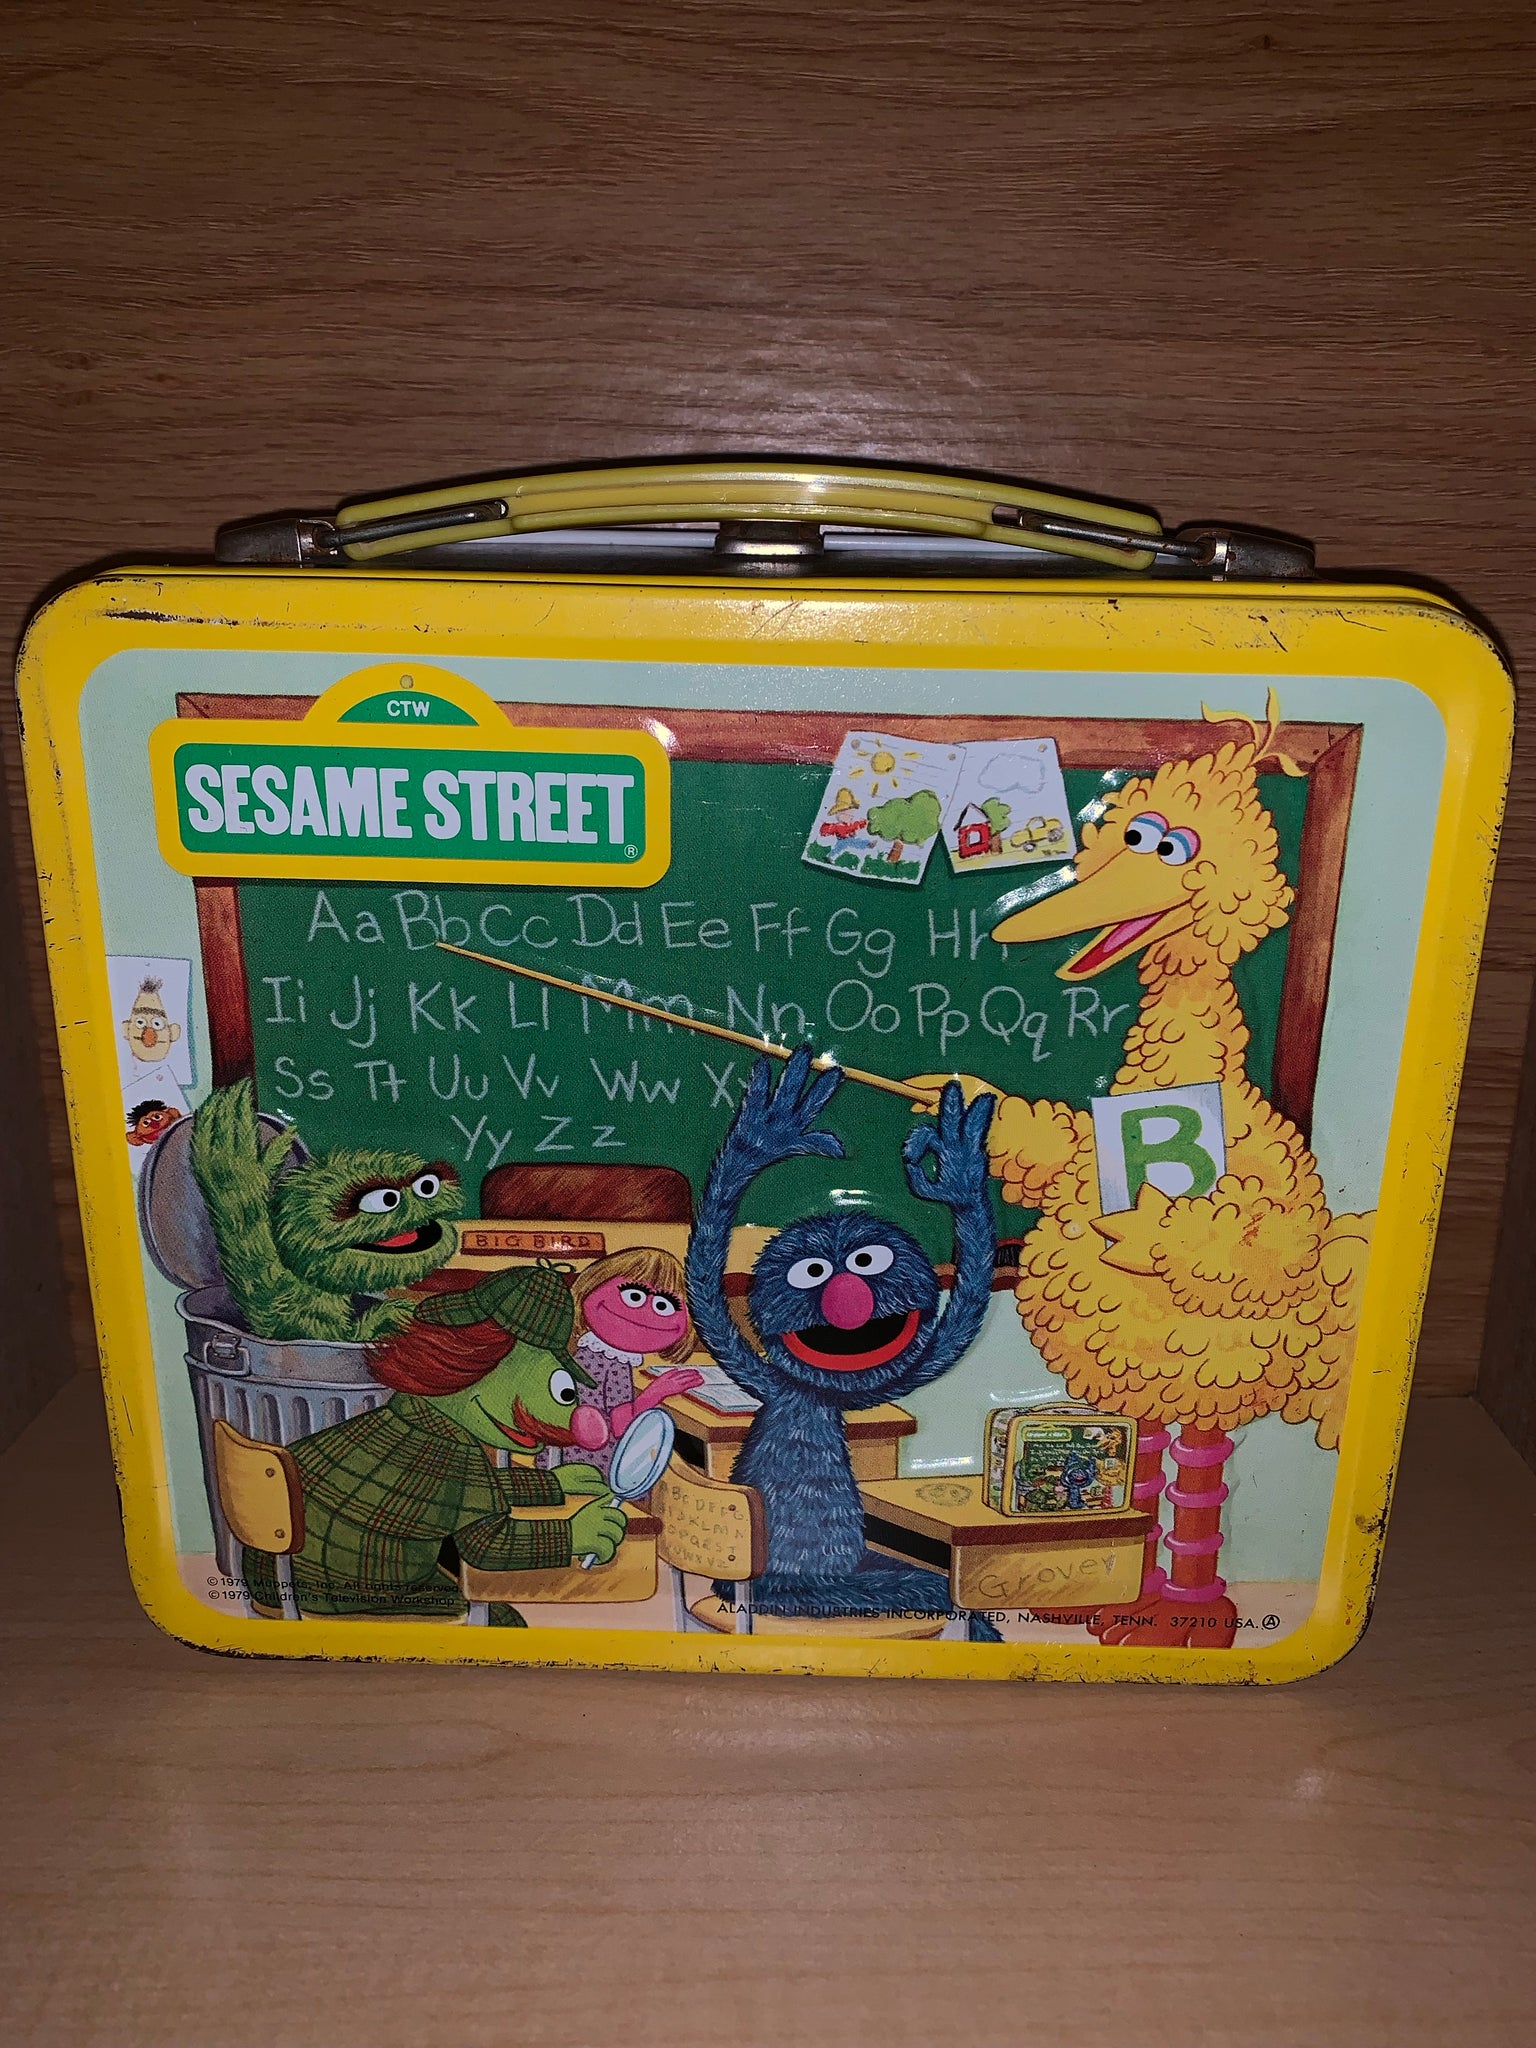 Sesame Street Big Bird Lunch Box Kit for Kids Green Bento Box